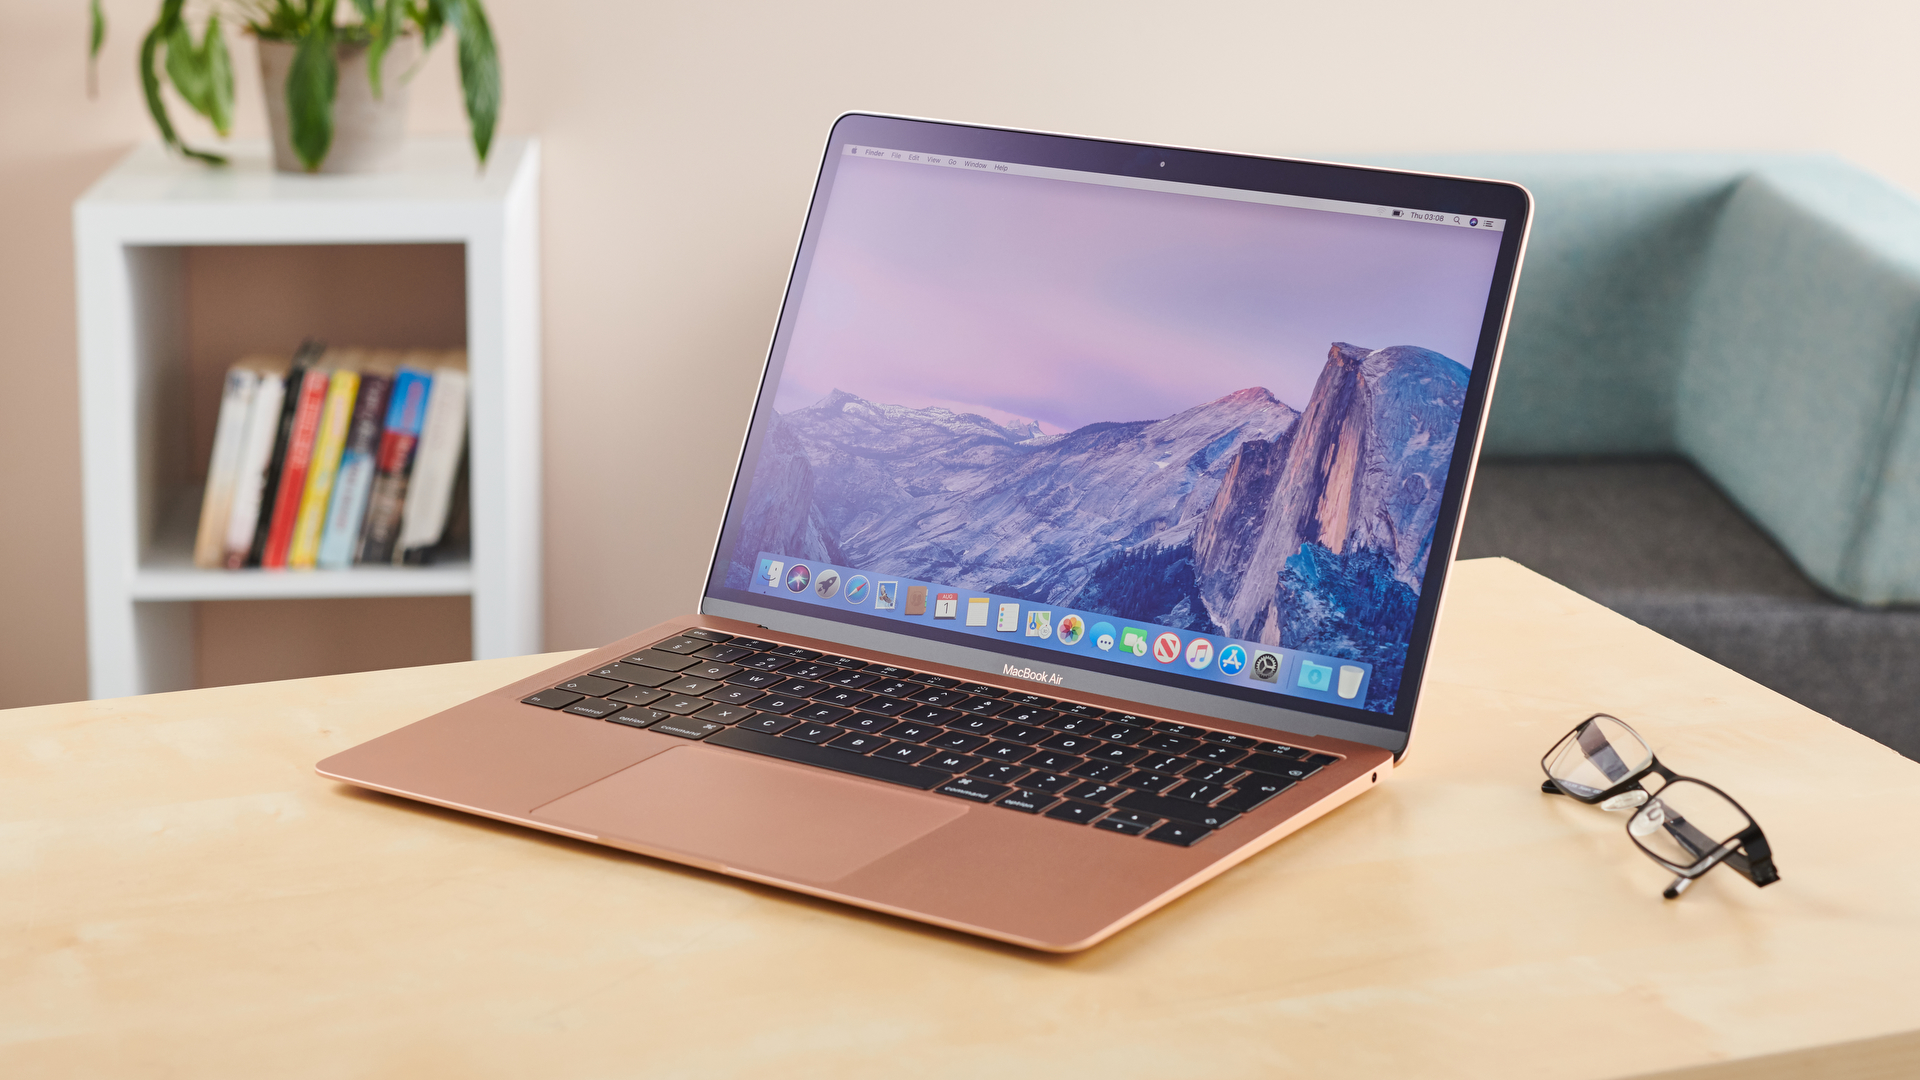 MacBook Air 2019 مقابل MacBook Pro 2019: ما هو الأفضل بالنسبة لك؟